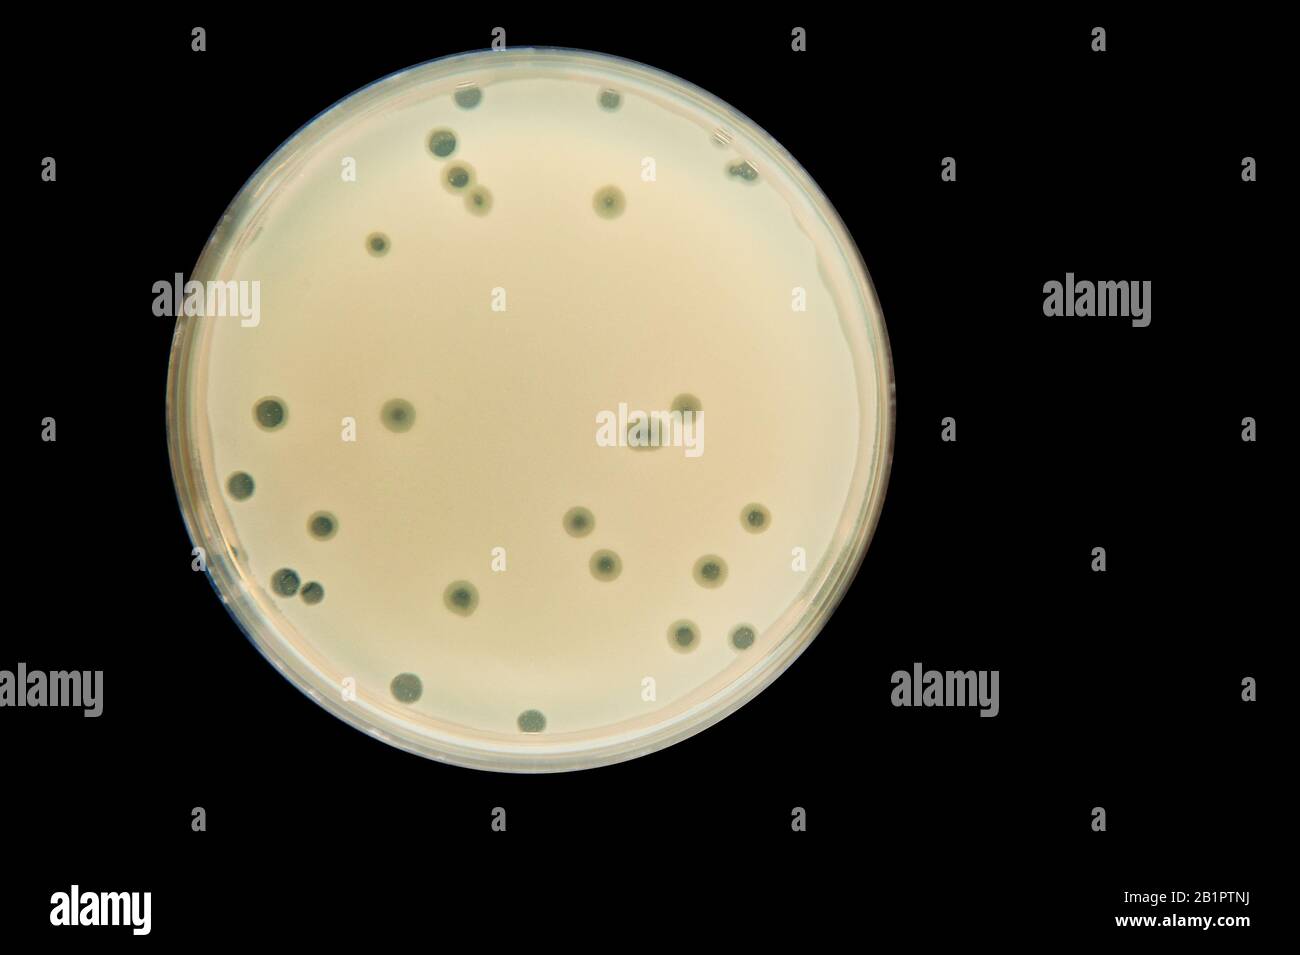 Petrischale mit Bakterienkultur mit Sphärenaktivität - Plaque Stockfoto